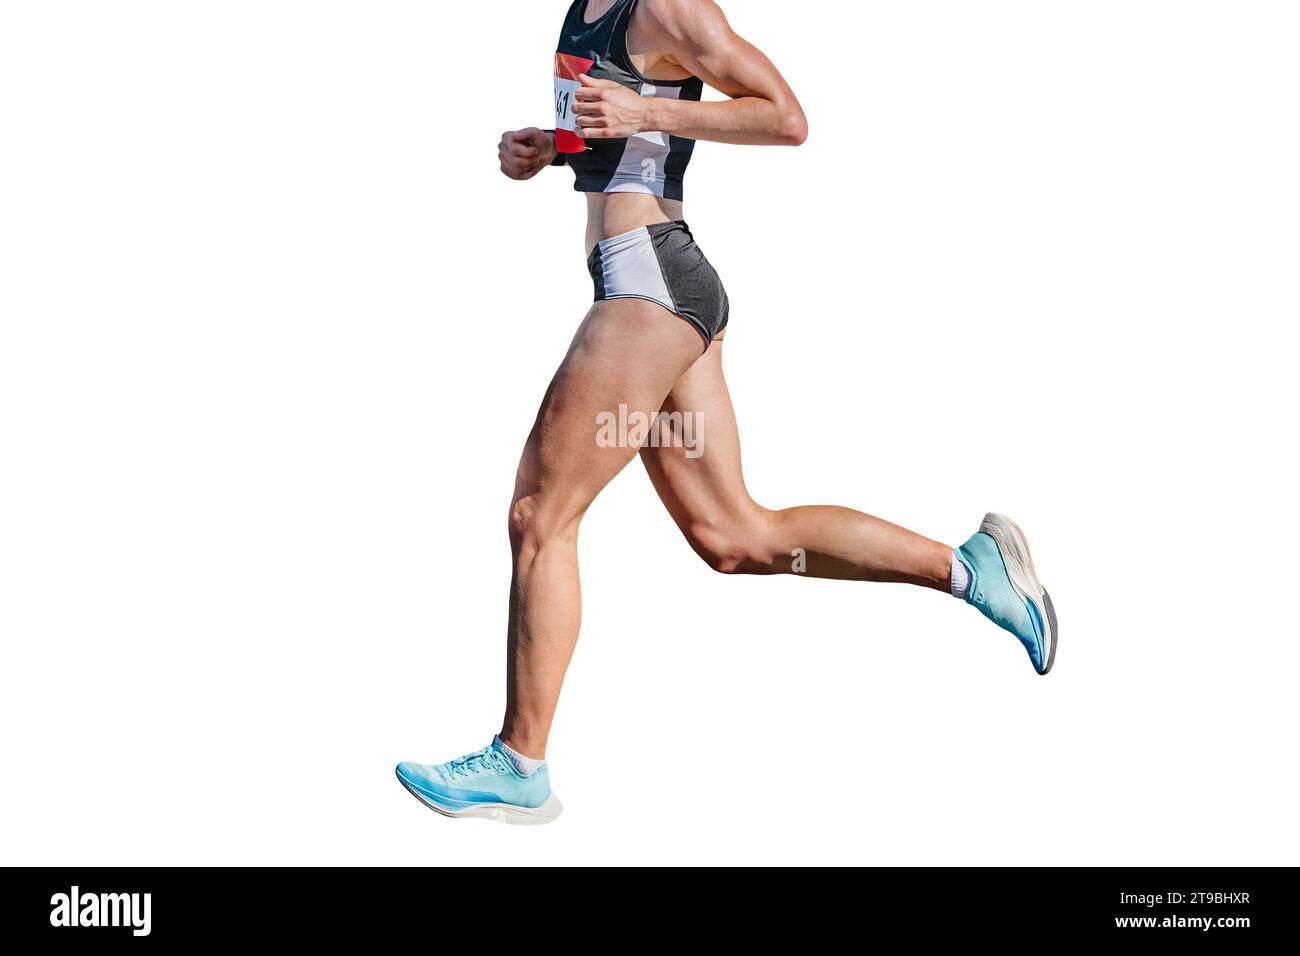 side view female runner athlete running city marathon race, isolated on white background Stock Photo